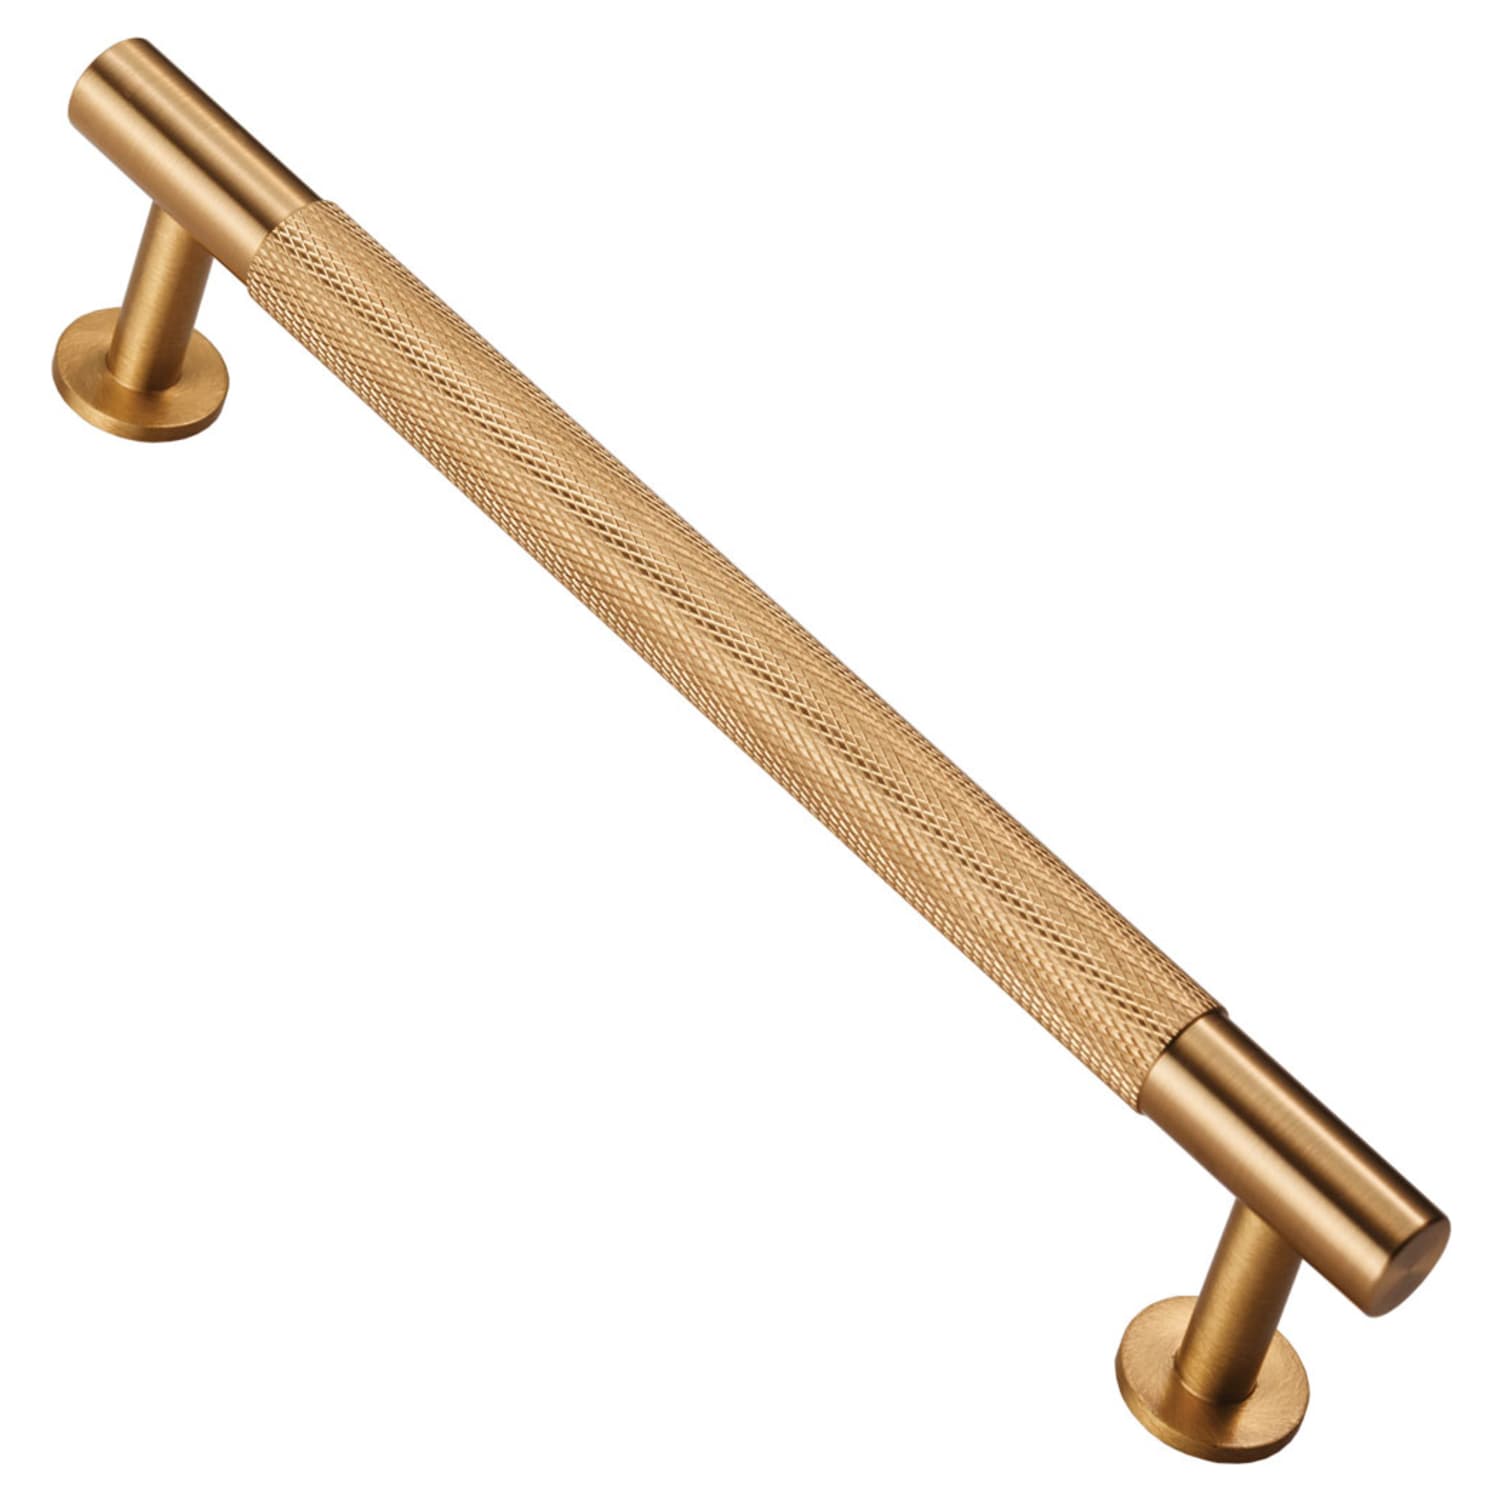 Carlisle Brass FTD710 Lines Cabinet Pull Handles - Satin Brass